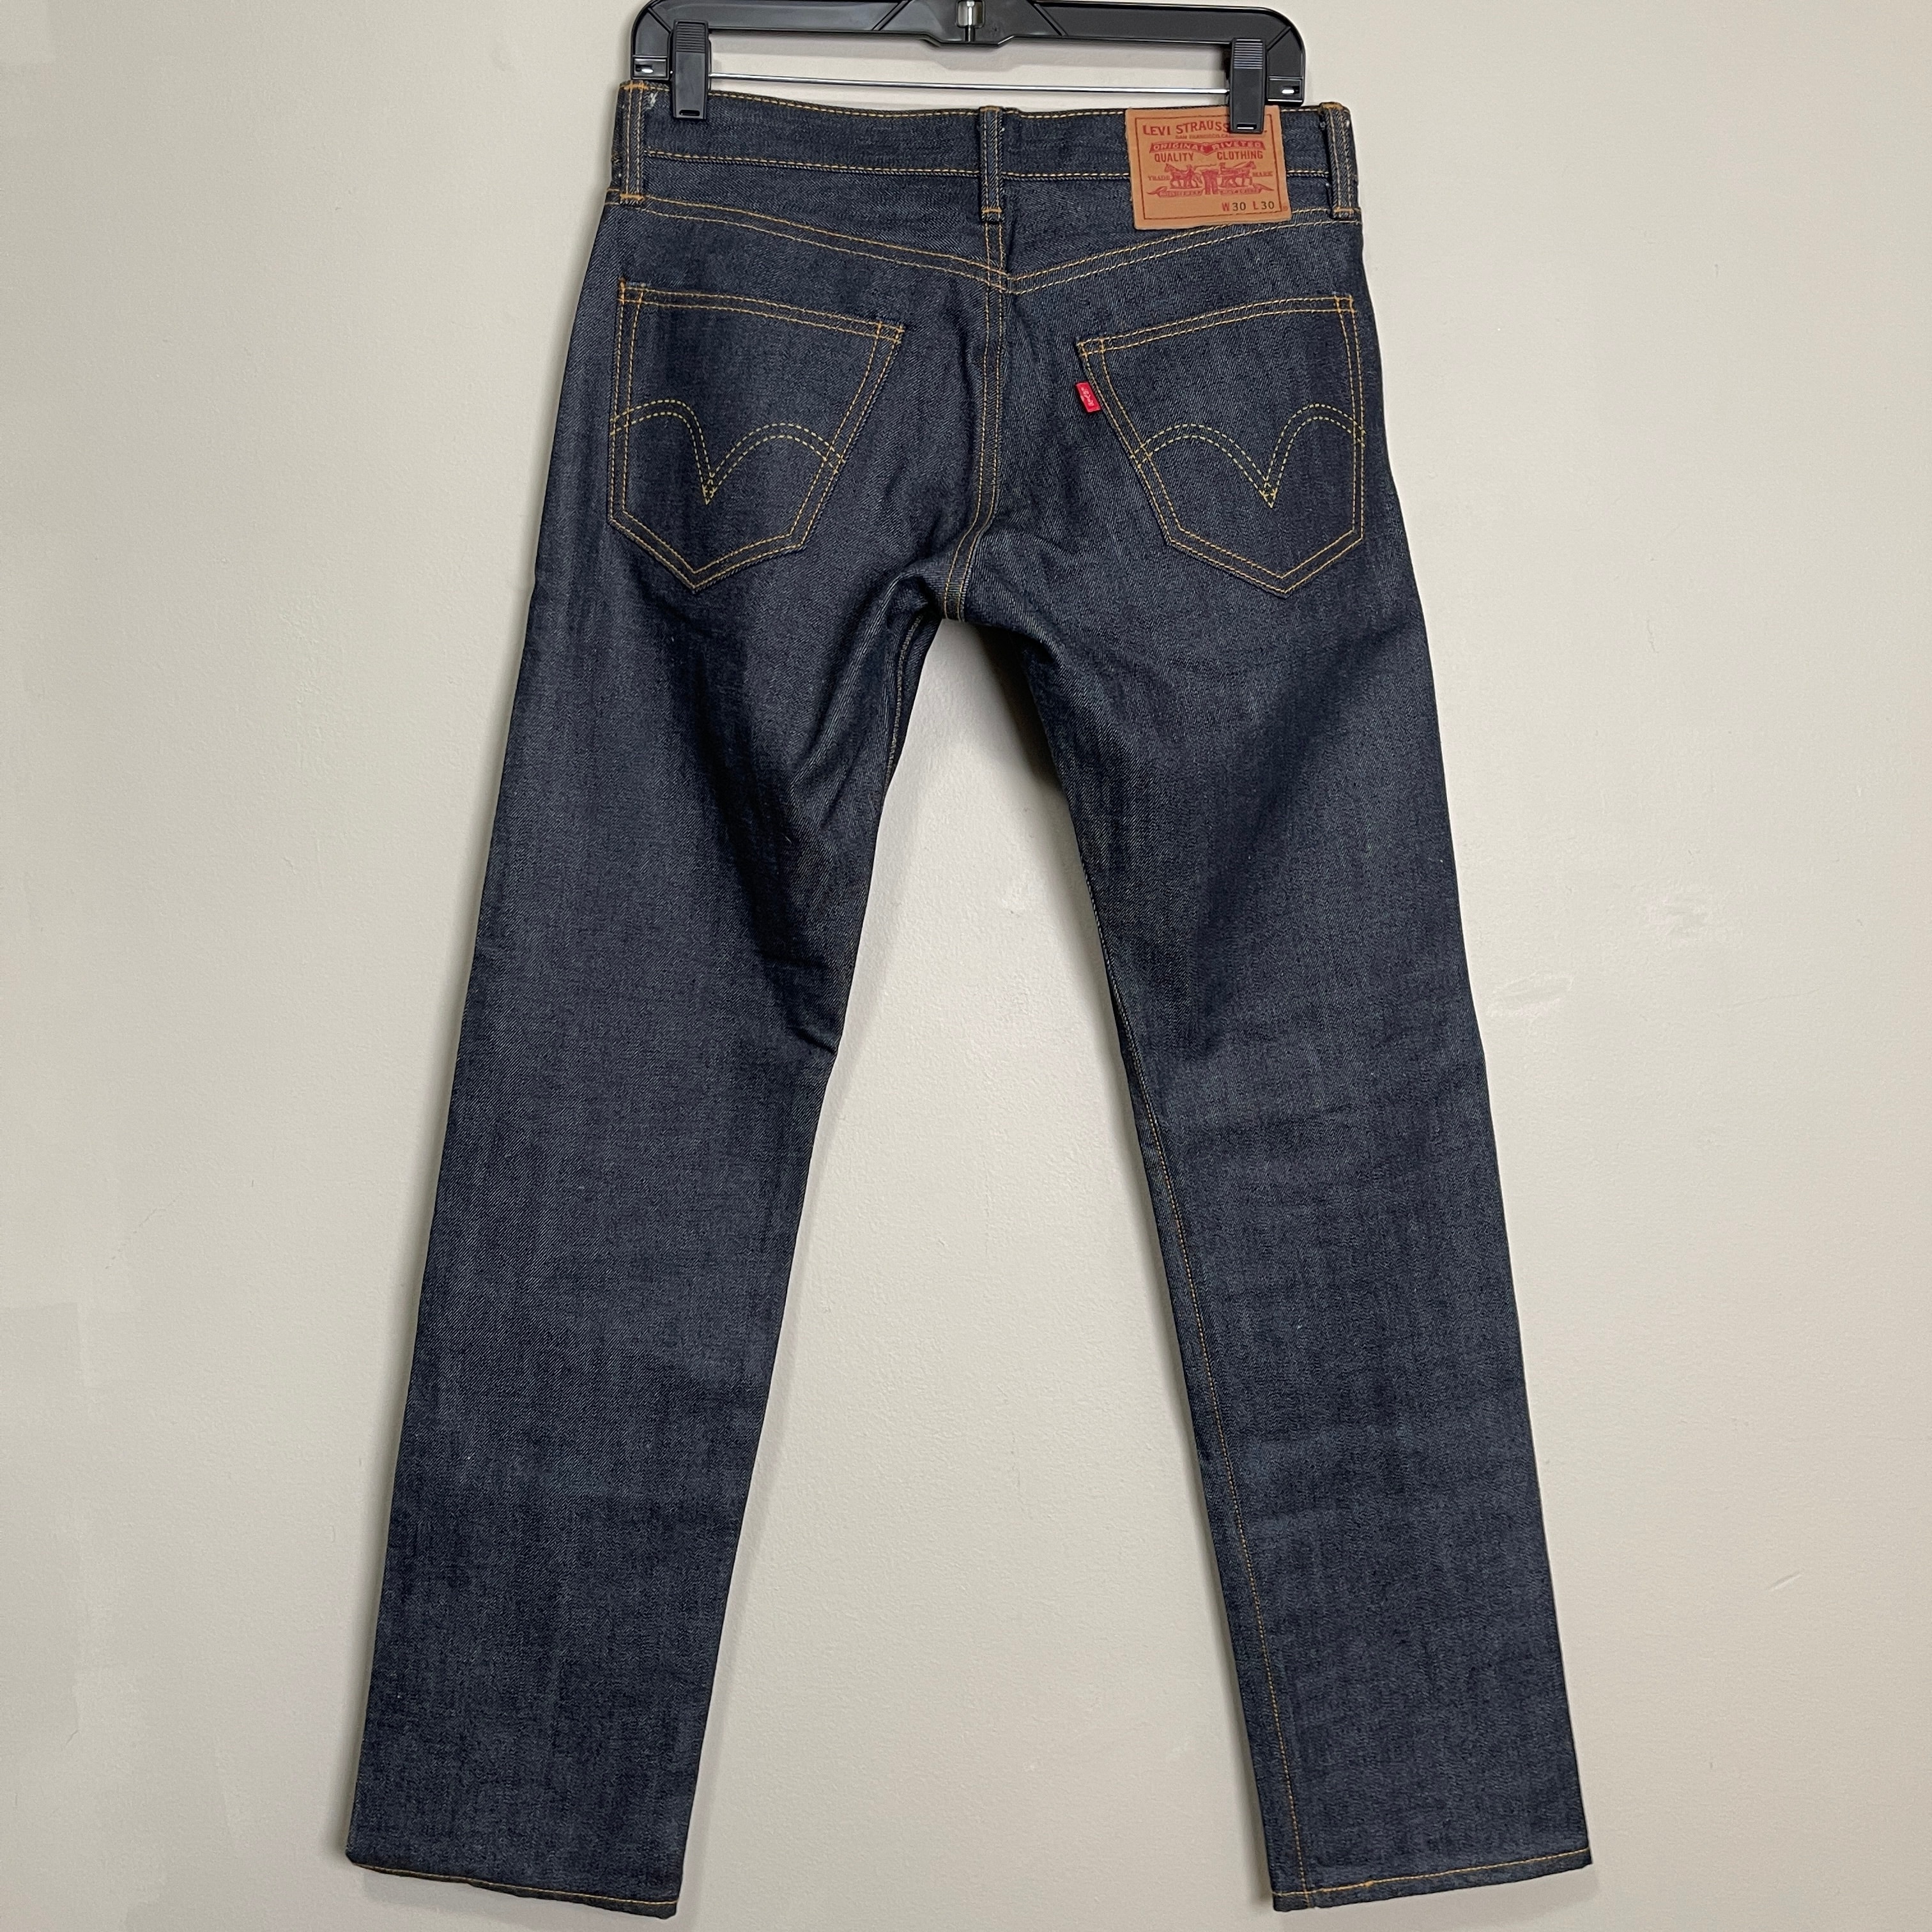 Levi's Matchstick skinny Blue selvedge denim jean men's sz 30x30 | eBay